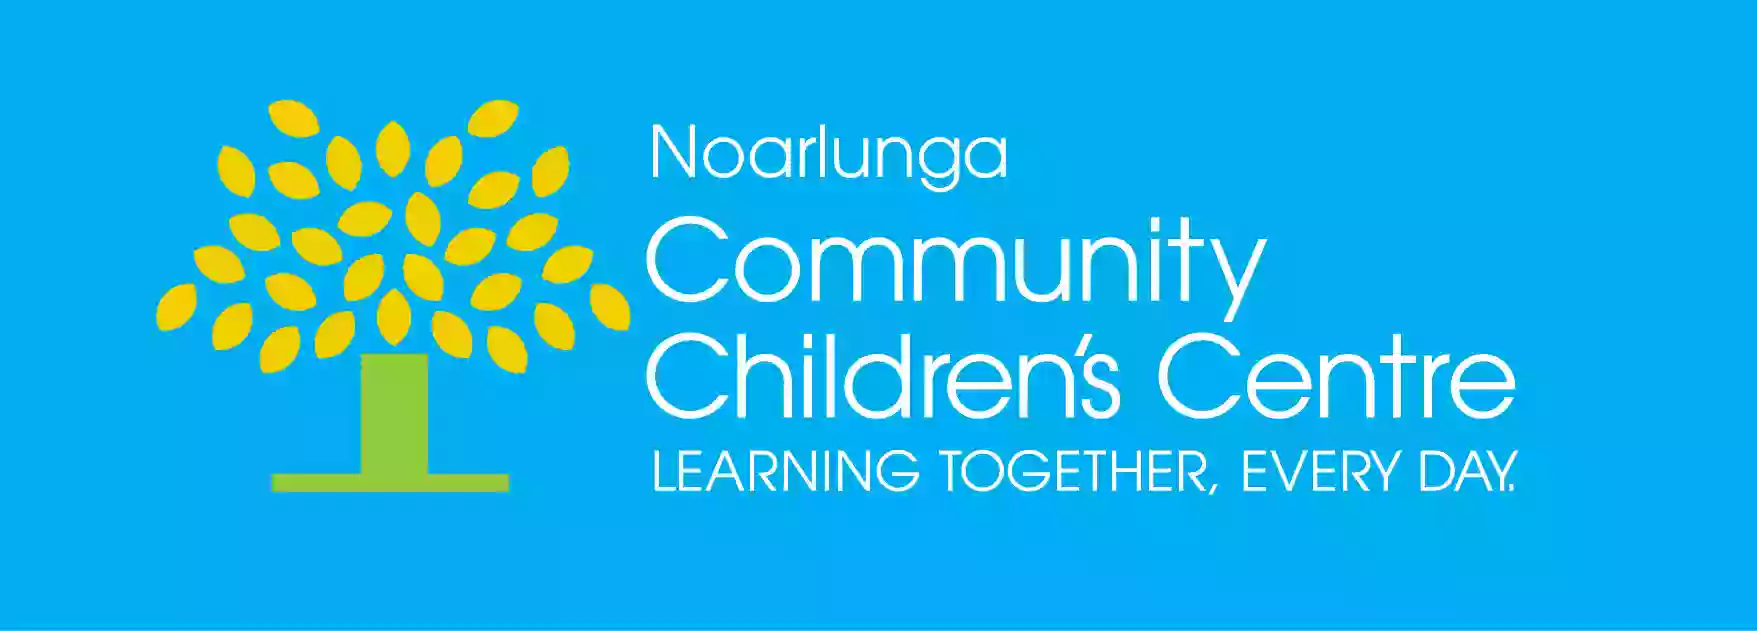 Noarlunga Community Childrens Centre